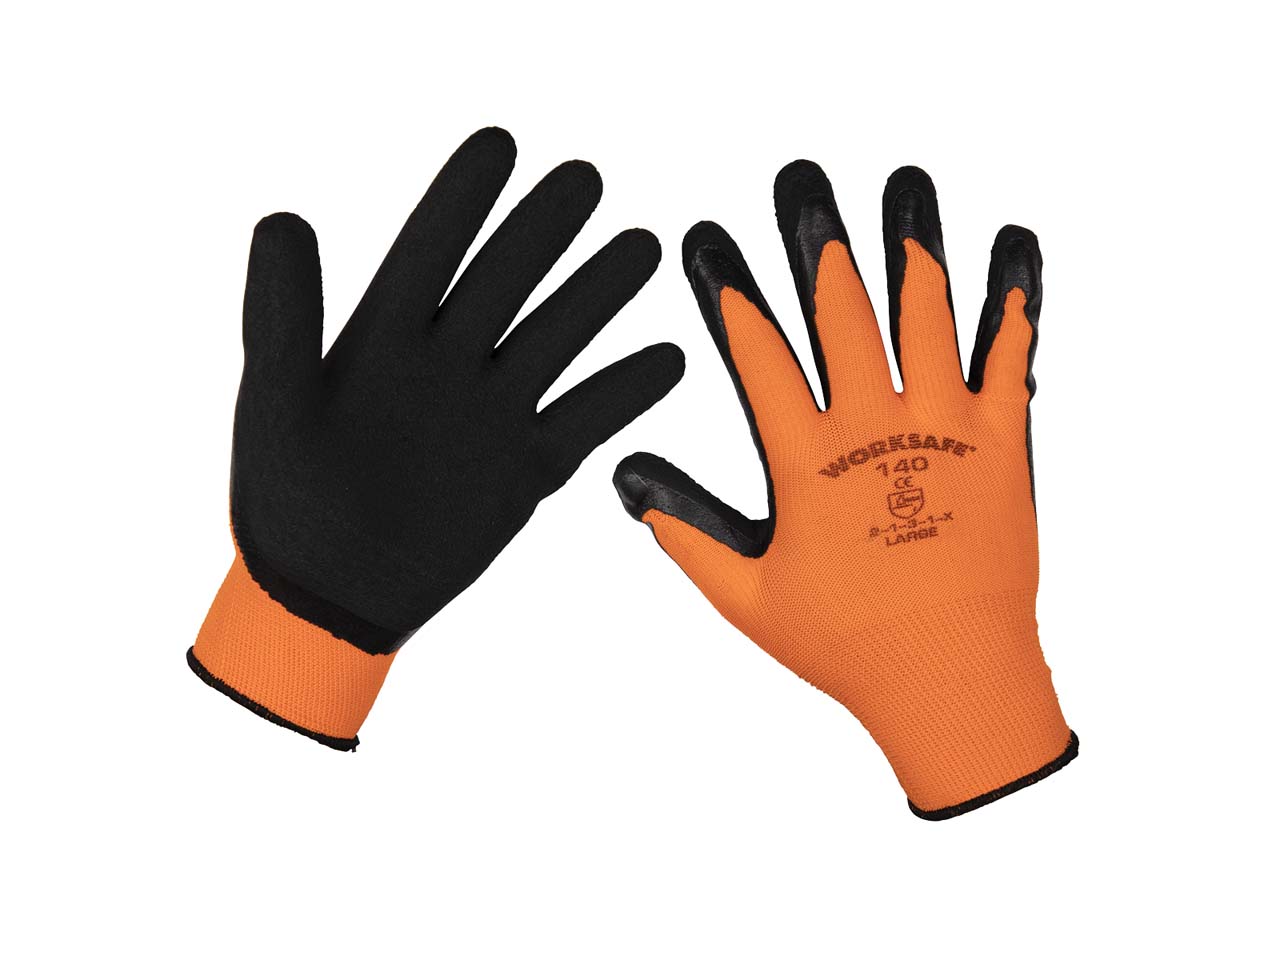 foam latex gloves